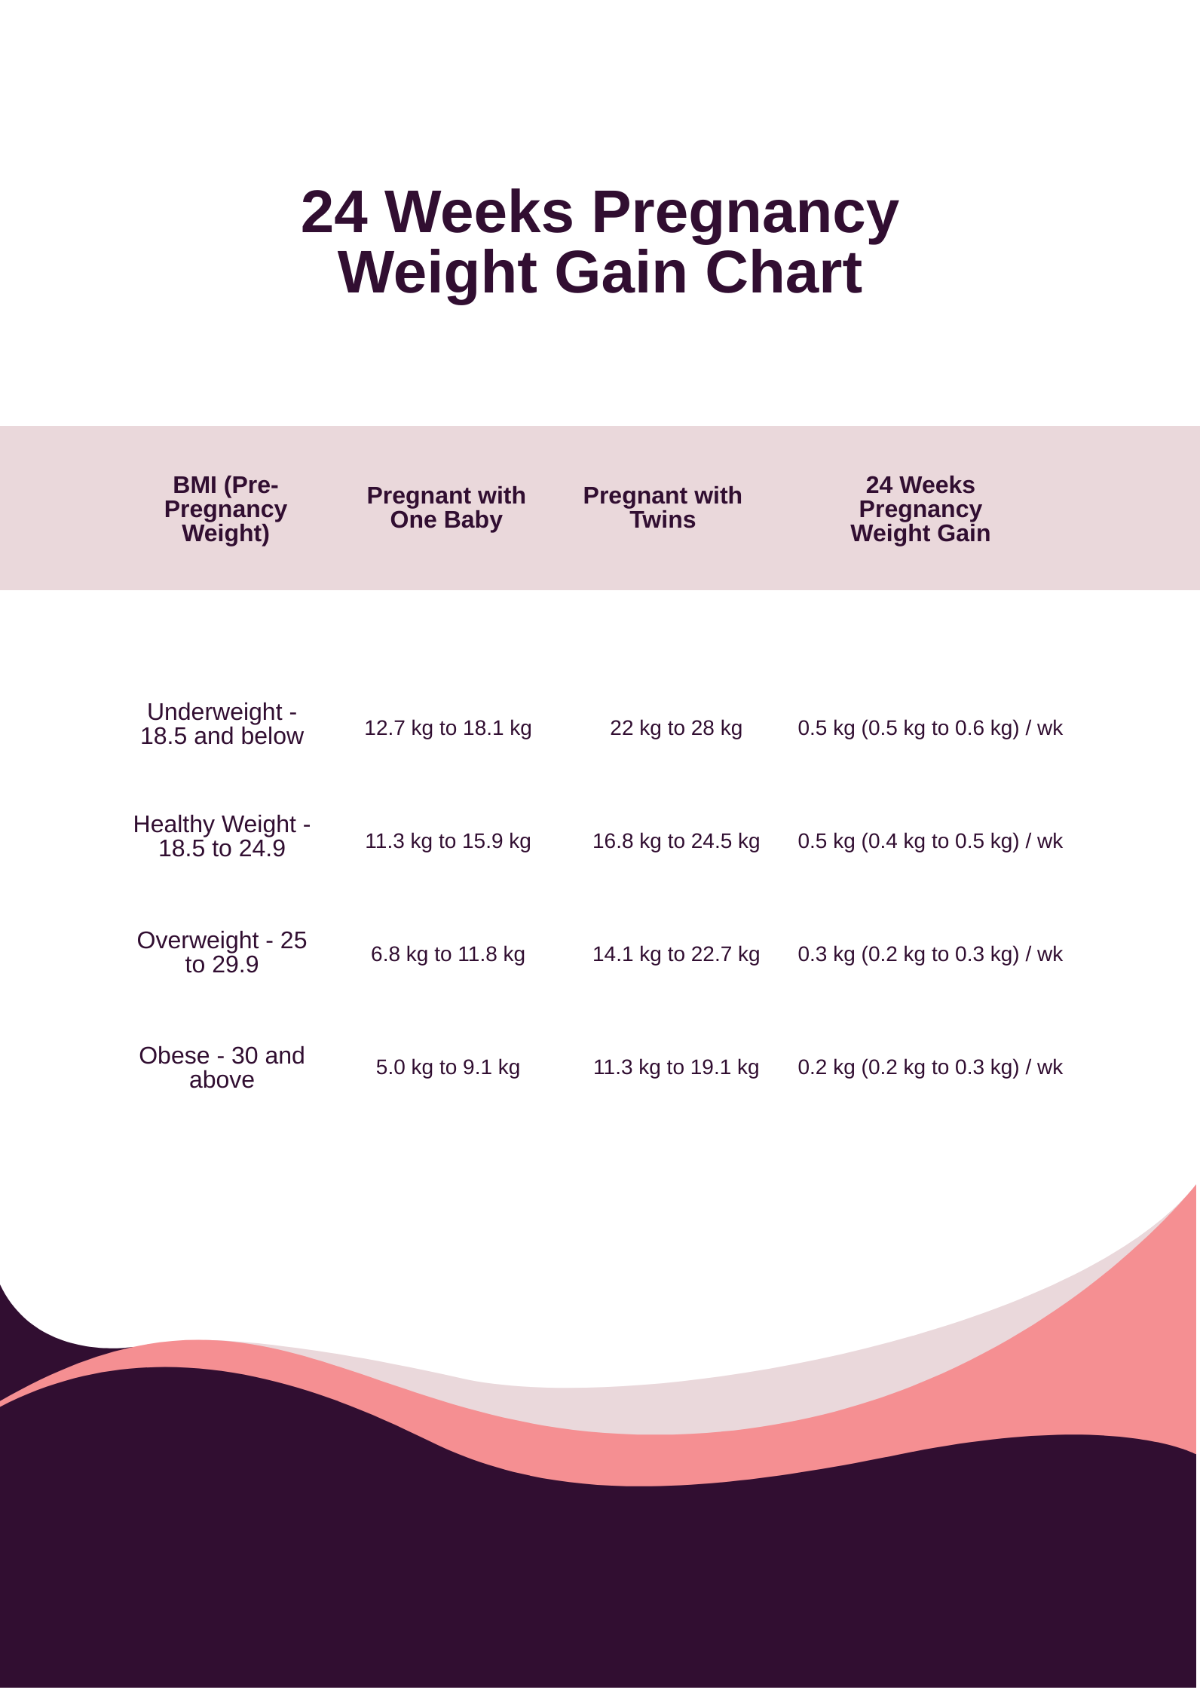 24 Weeks Pregnancy Weight Gain Chart